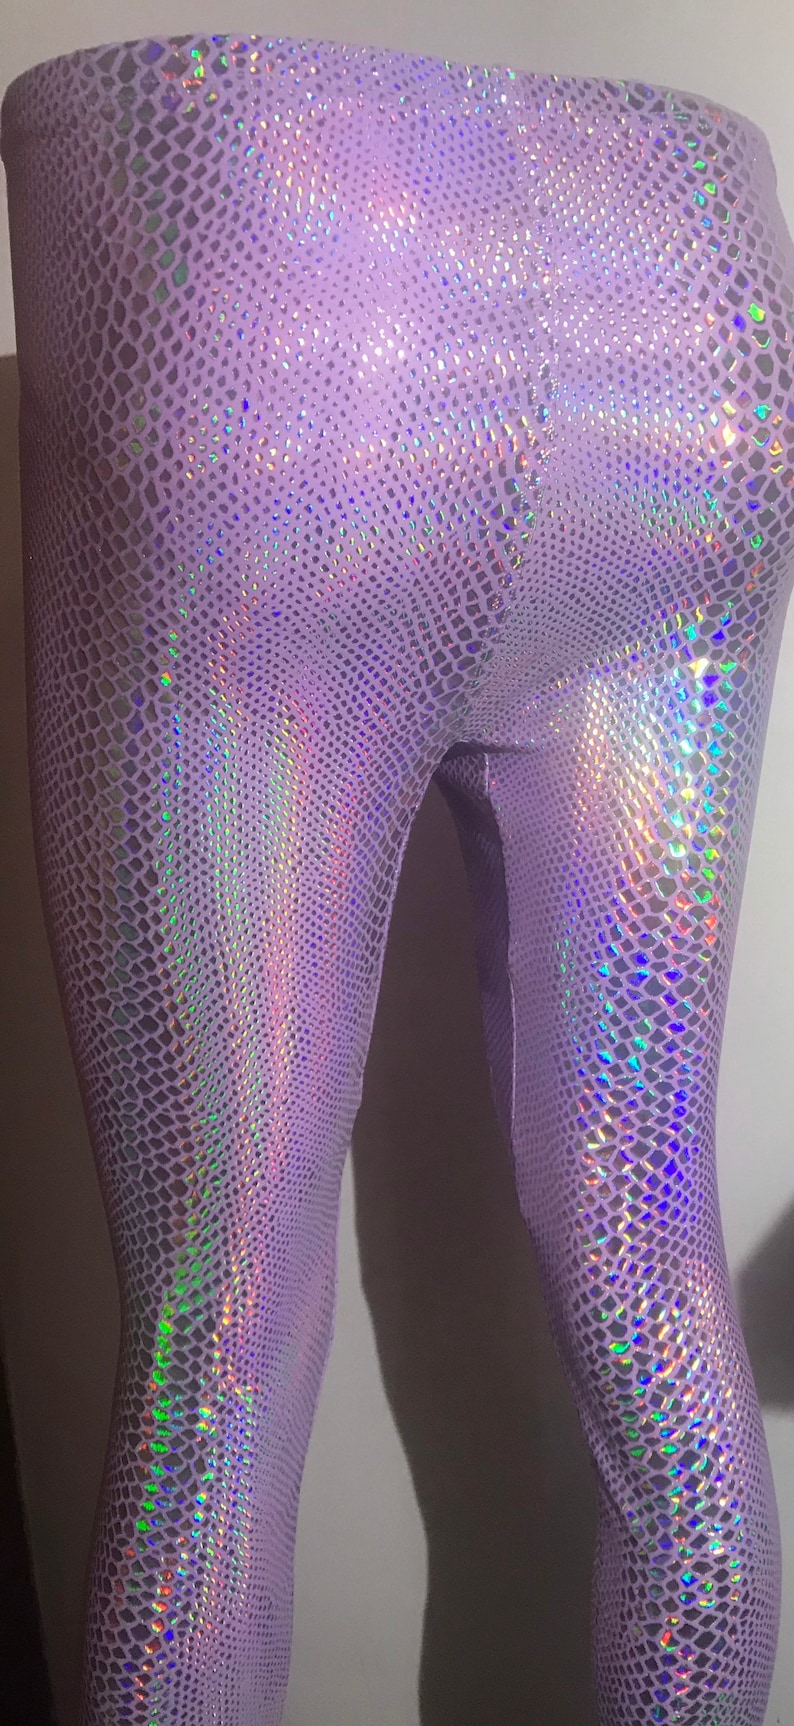 Holographic leggings, lilac snake print leggings pink snake print leggings hologram leggings iridescent leggings image 6